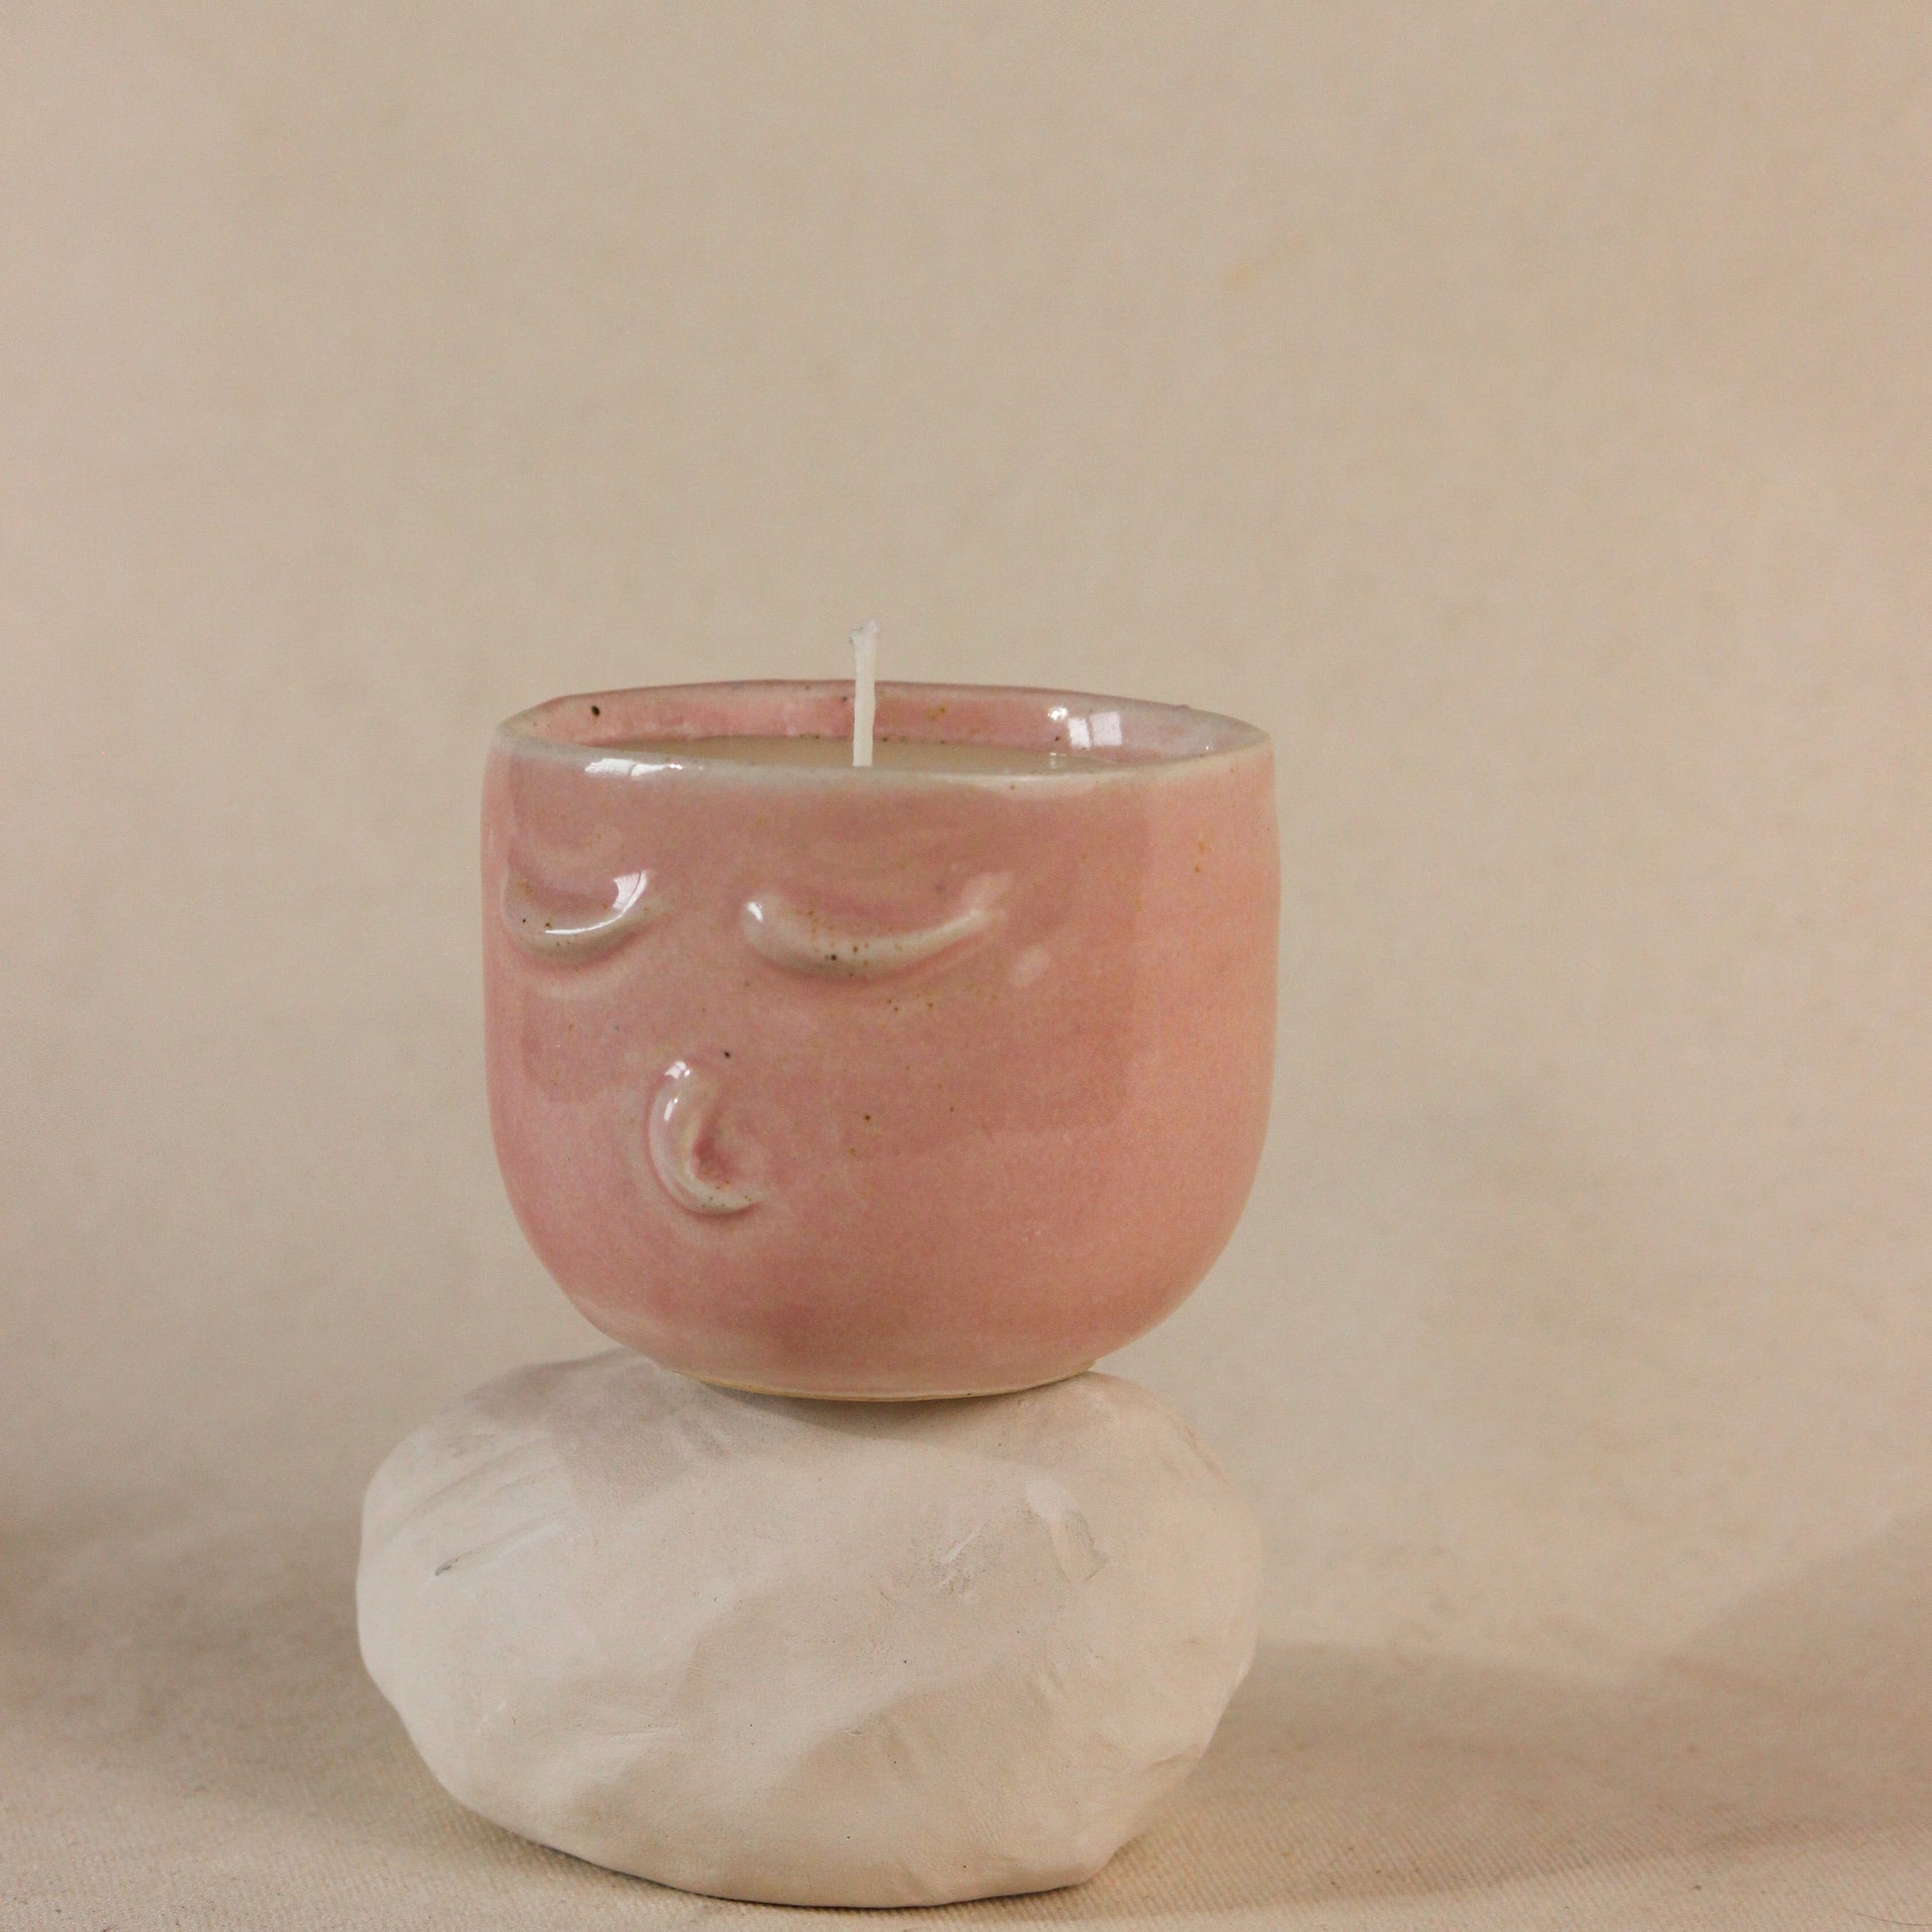 The Priest Face Ceramic Jar Candle - Pink color